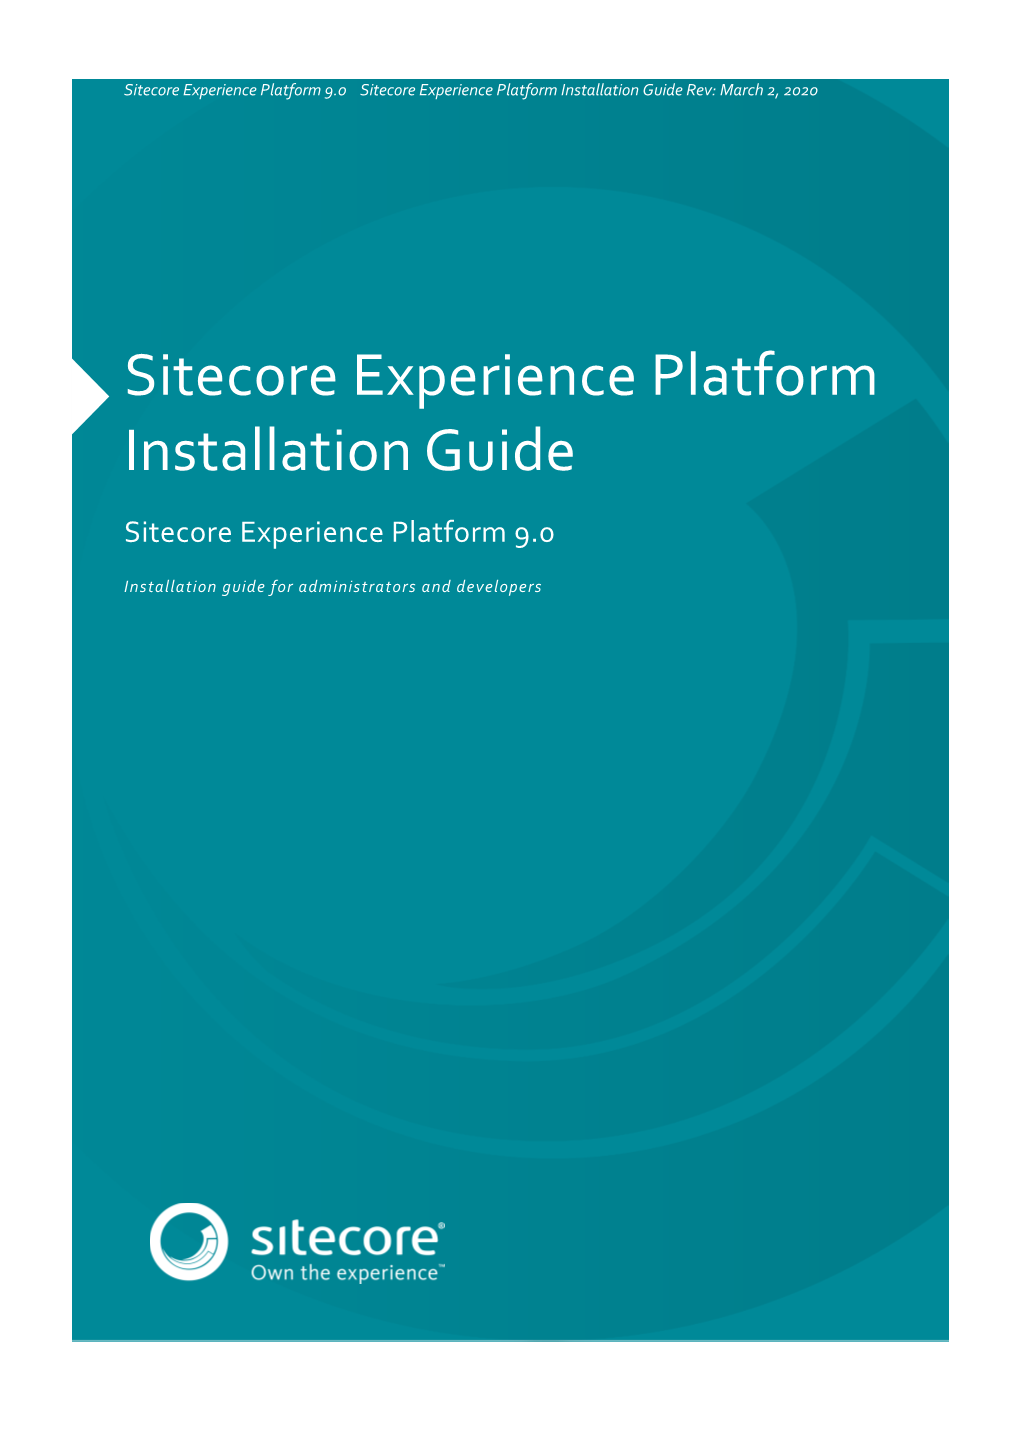 Sitecore Experience Platform Installation Guide Rev: March 2, 2020